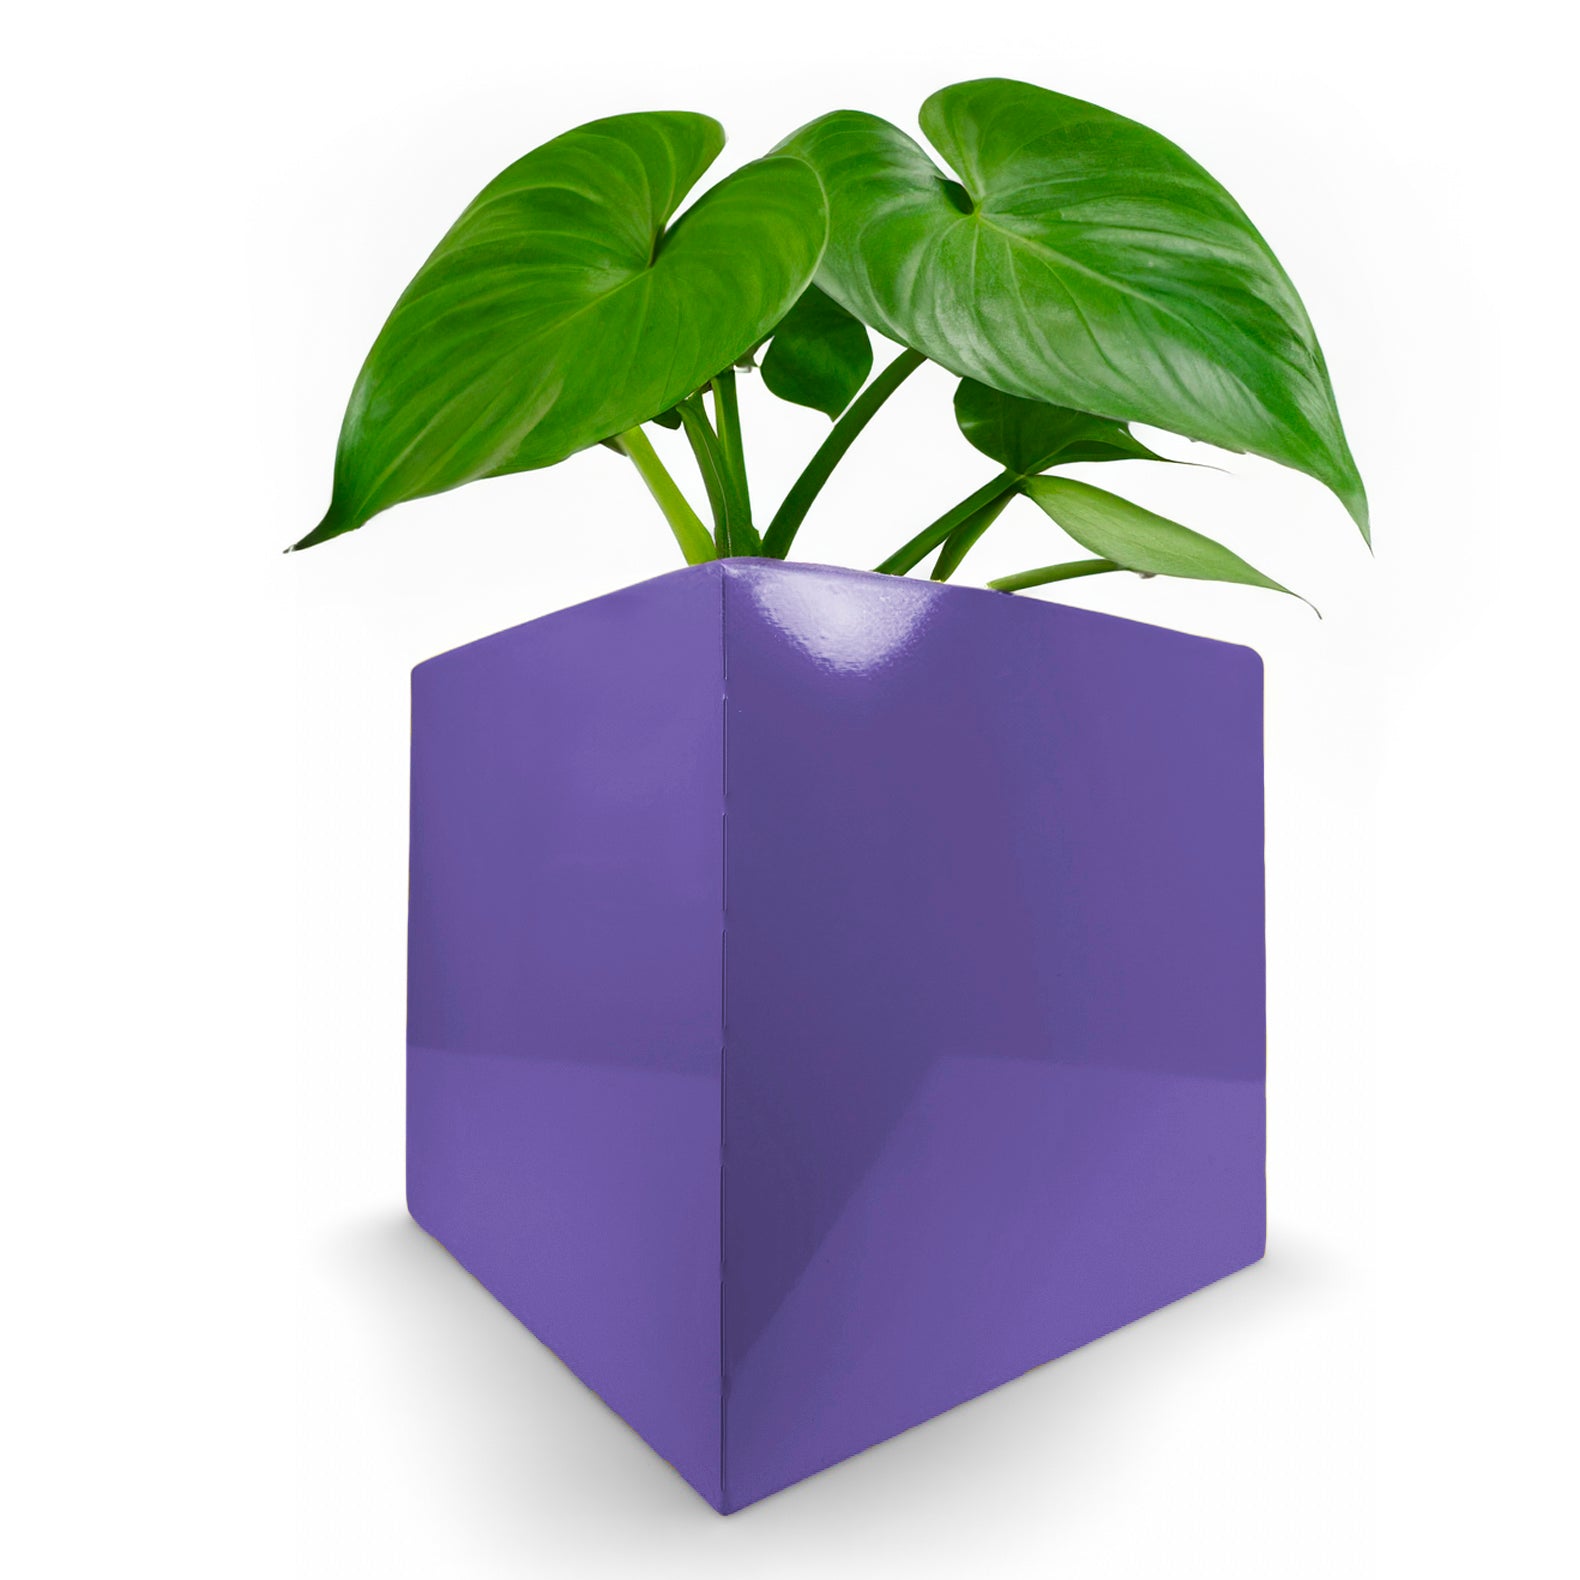 Cubitz Multi-Use Galvanised Steel Cube - Outdoor Planter, Indoor Storage & More!